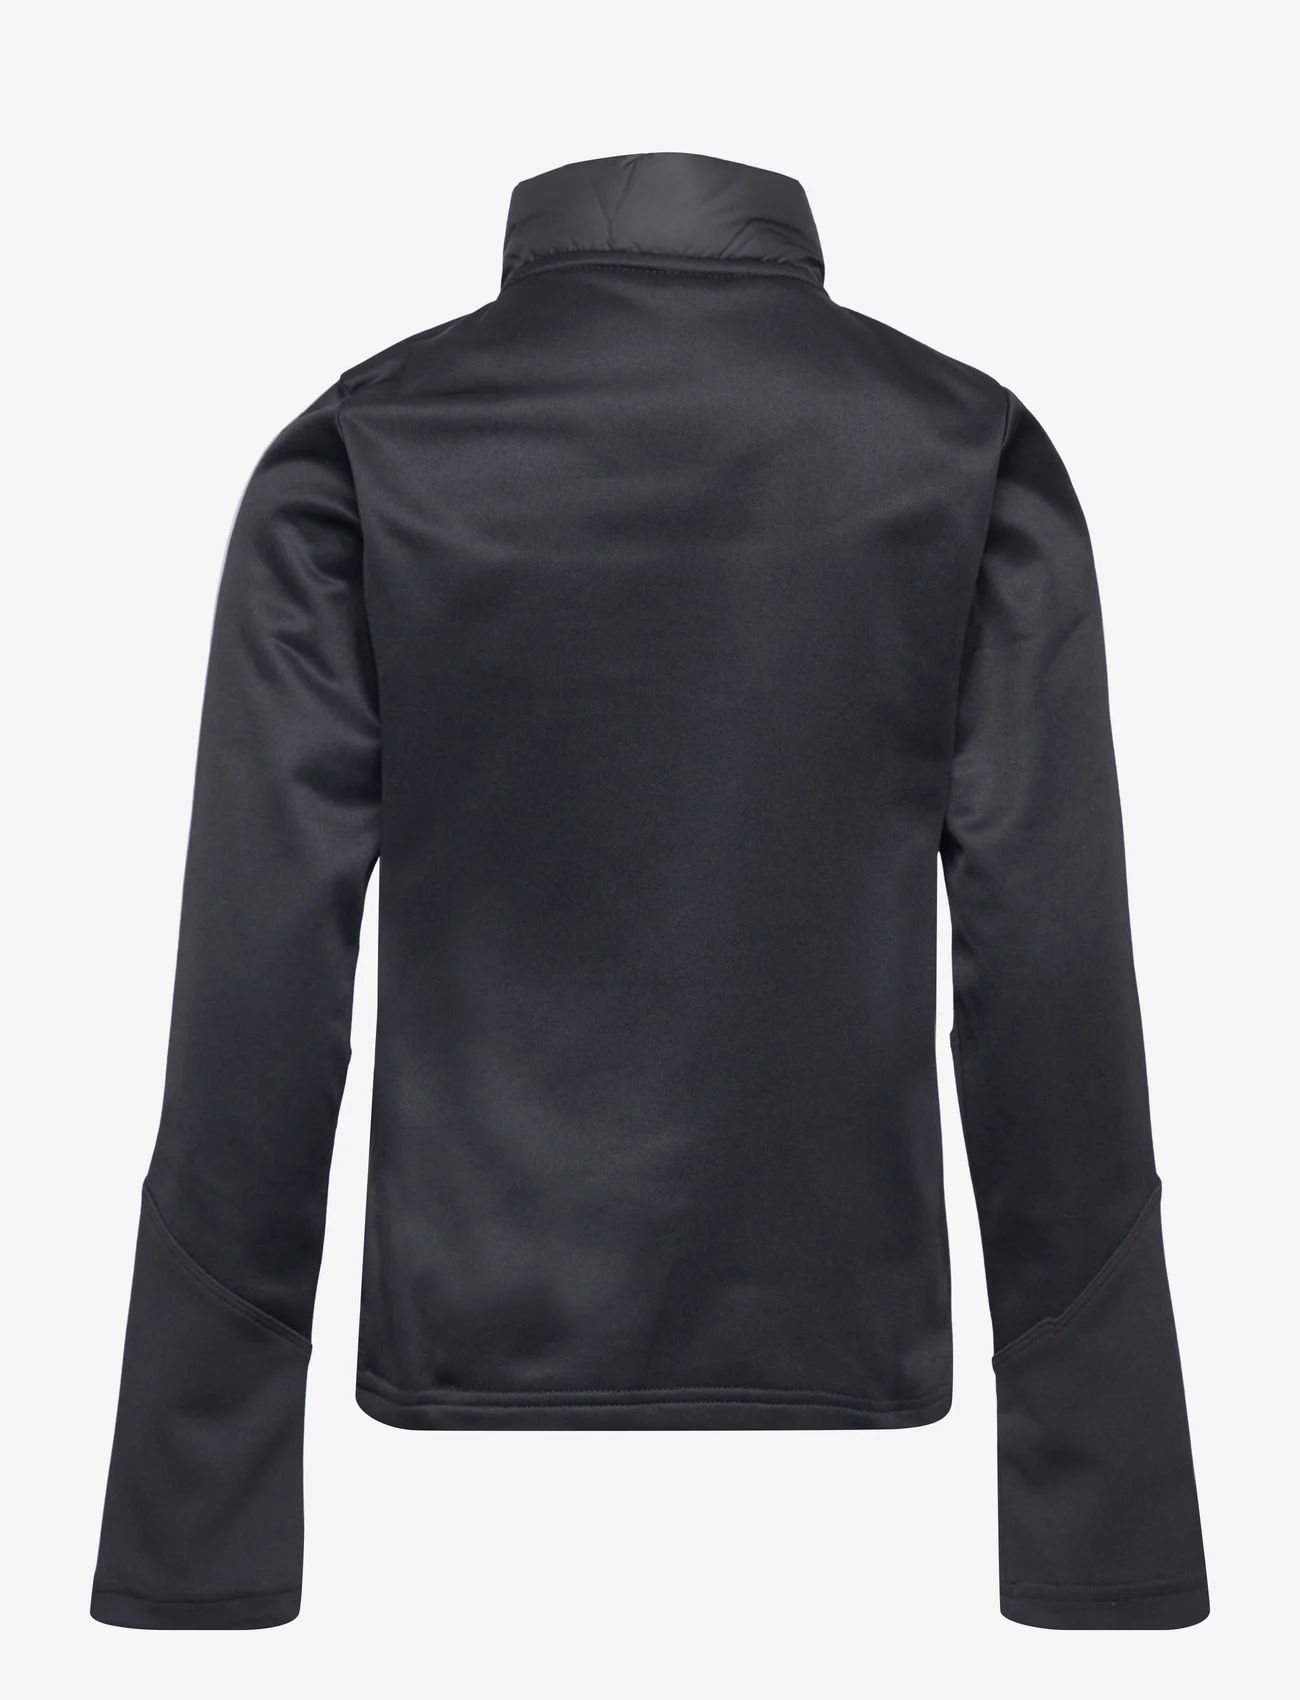 adidas Performance - TIRO23CBWINTOPY - sweaters - black/halsil - 1